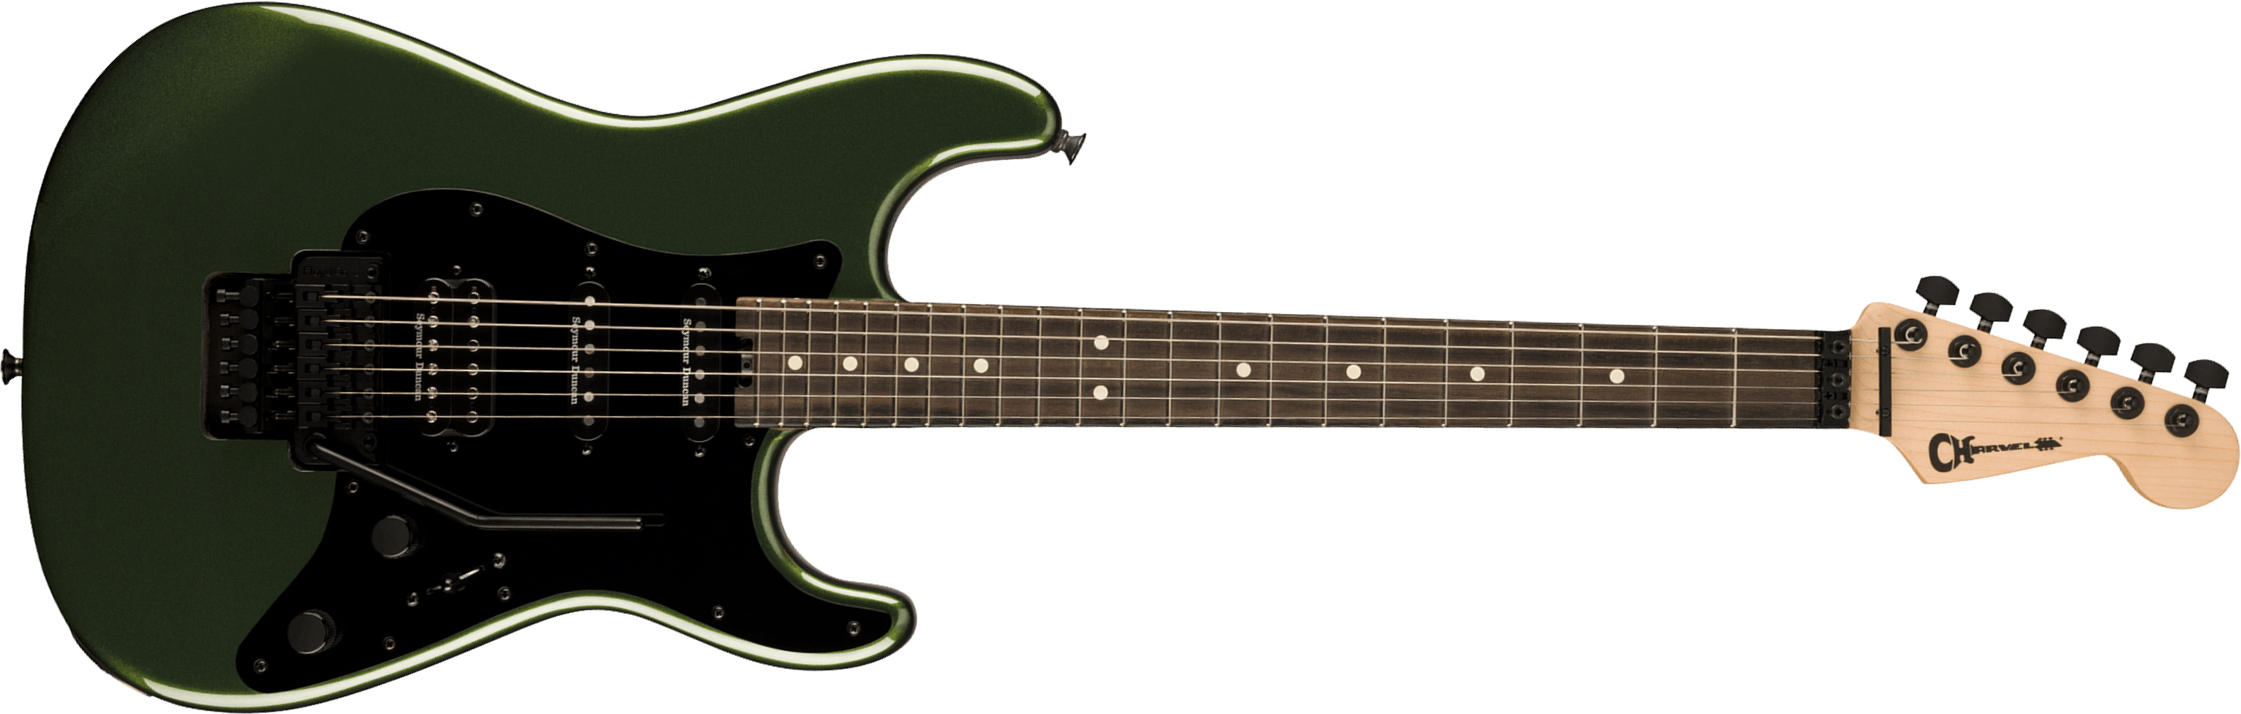 Charvel So-cal Style 1 Hss Fr E Pro-mod Seymour Duncan Eb - Lambo Green - Str shape electric guitar - Main picture